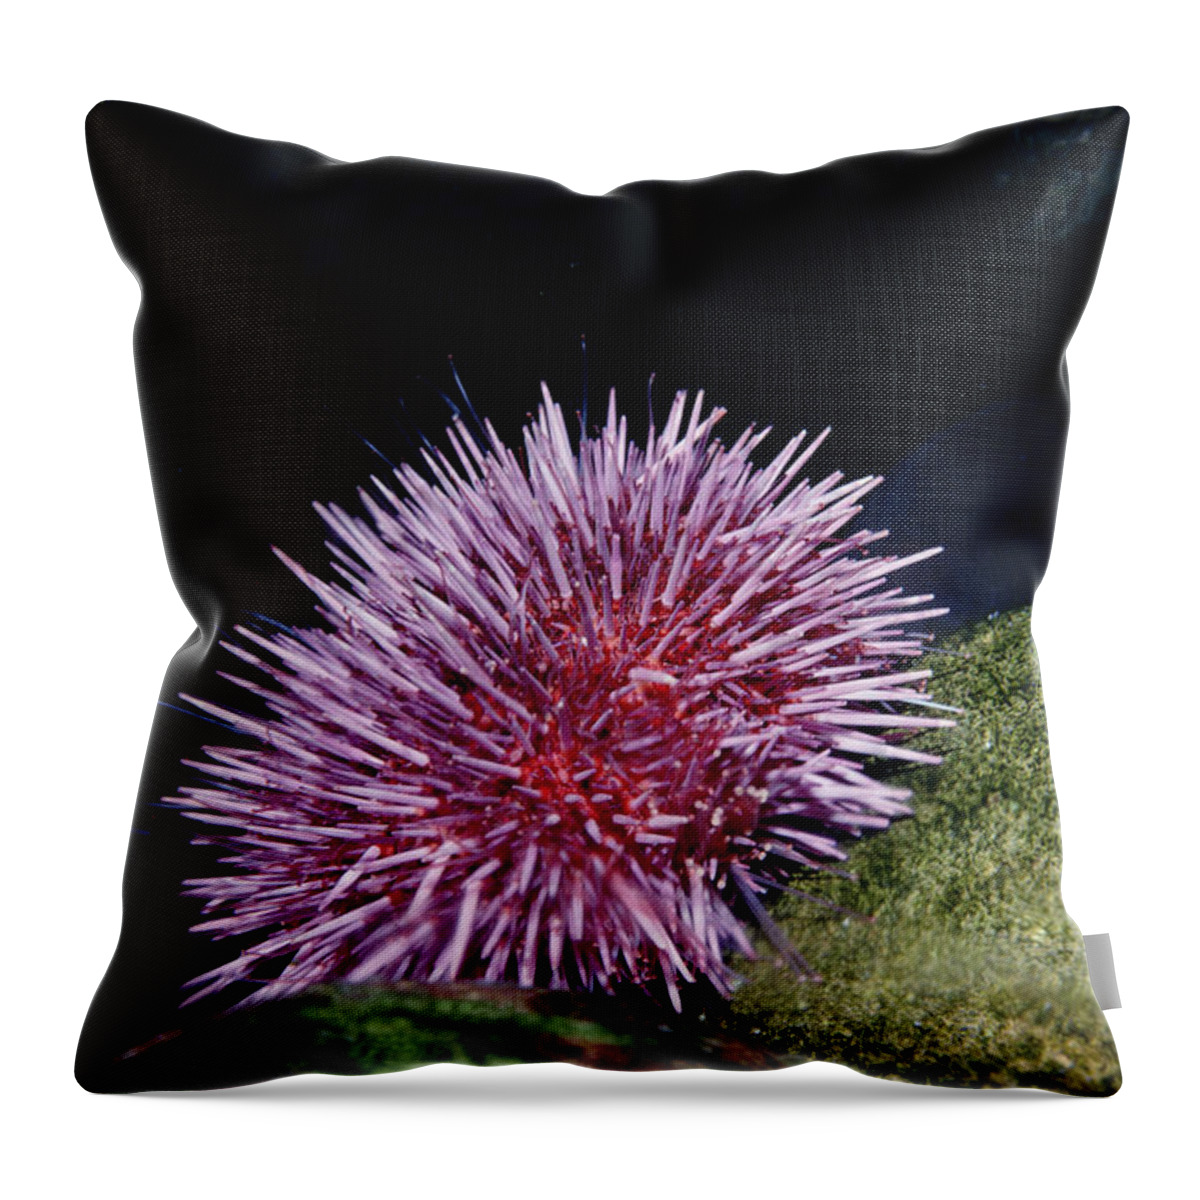 00094981 Throw Pillow featuring the photograph Purple Sea Urchin Feeding California by Flip Nicklin